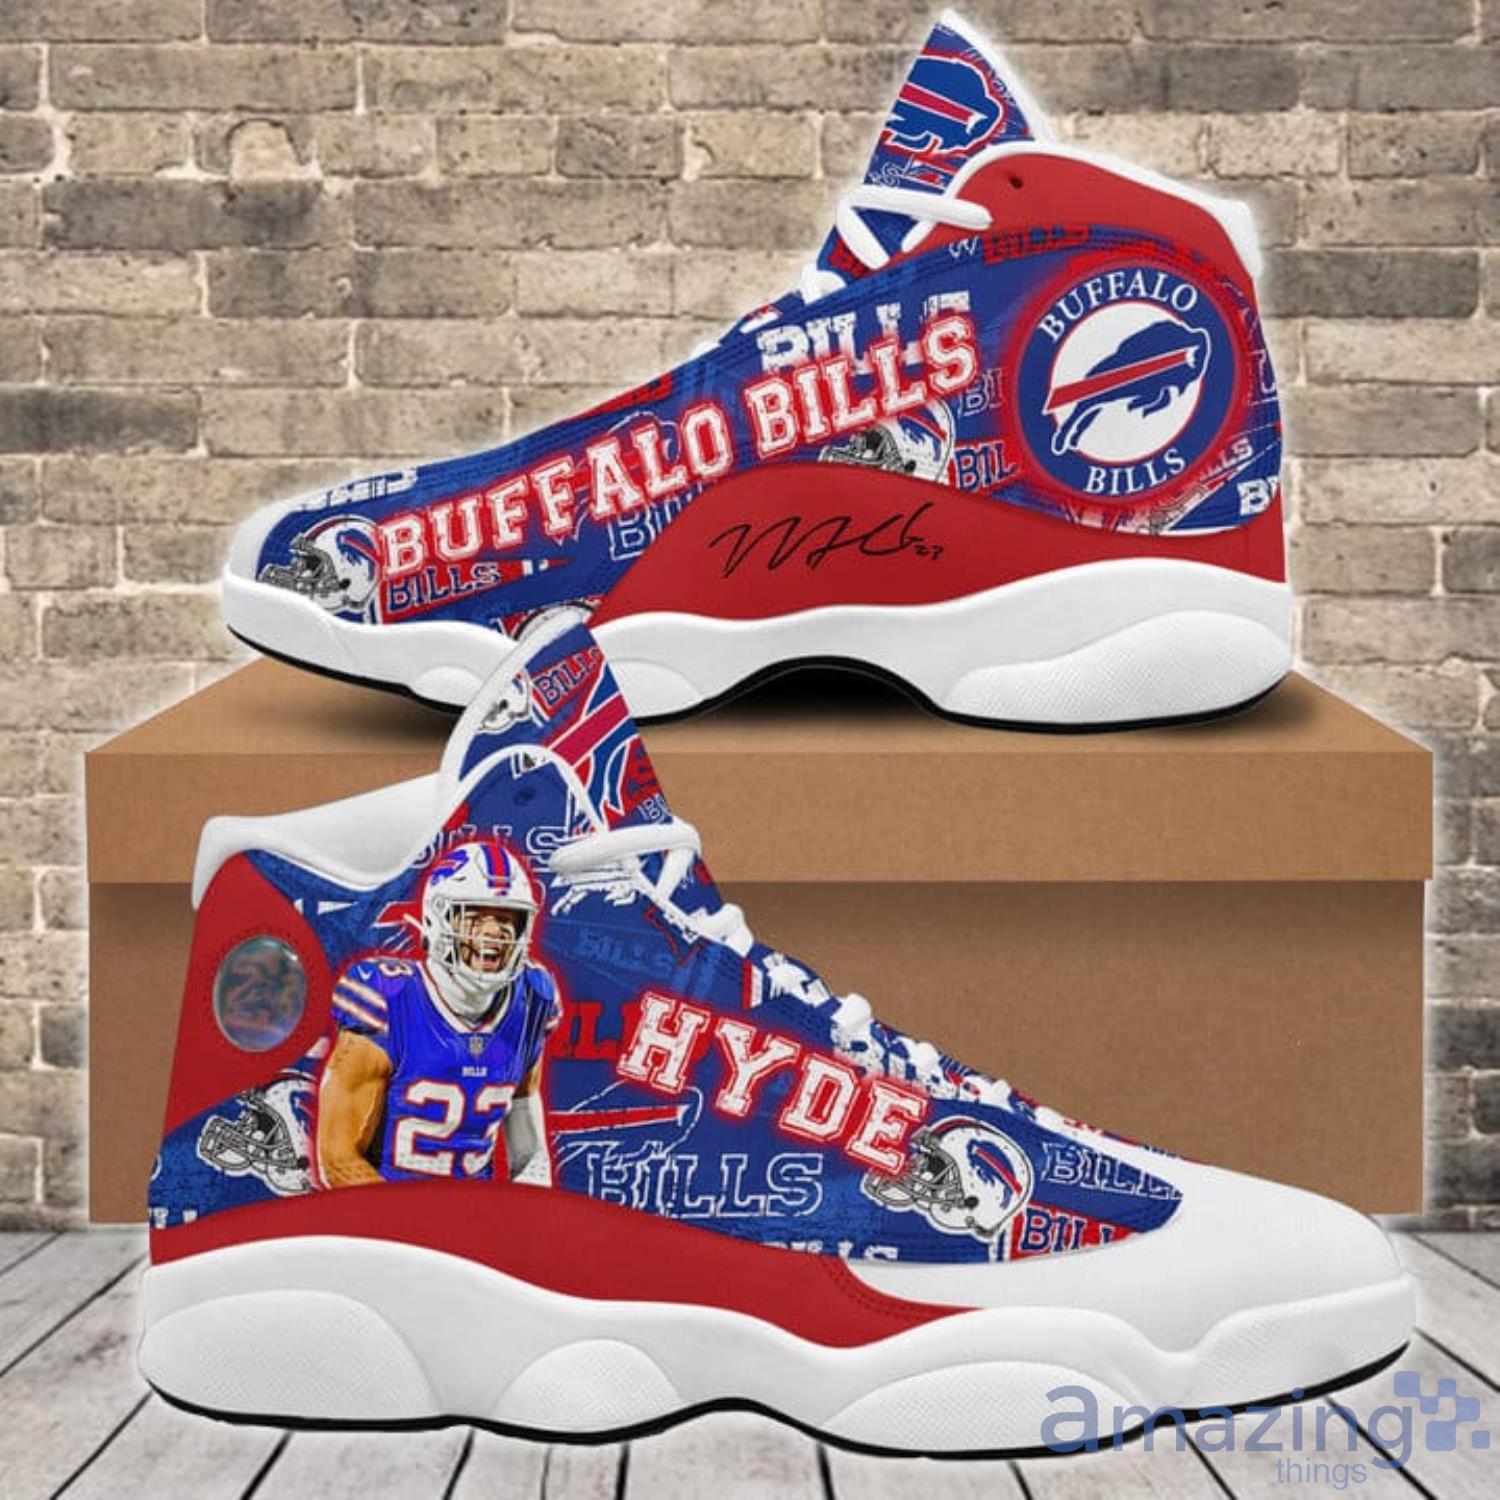 Buffalo Bills Fans Micah Hyde Air Jordan 13 Shoes For Men And Women - 0x720@1672403879426